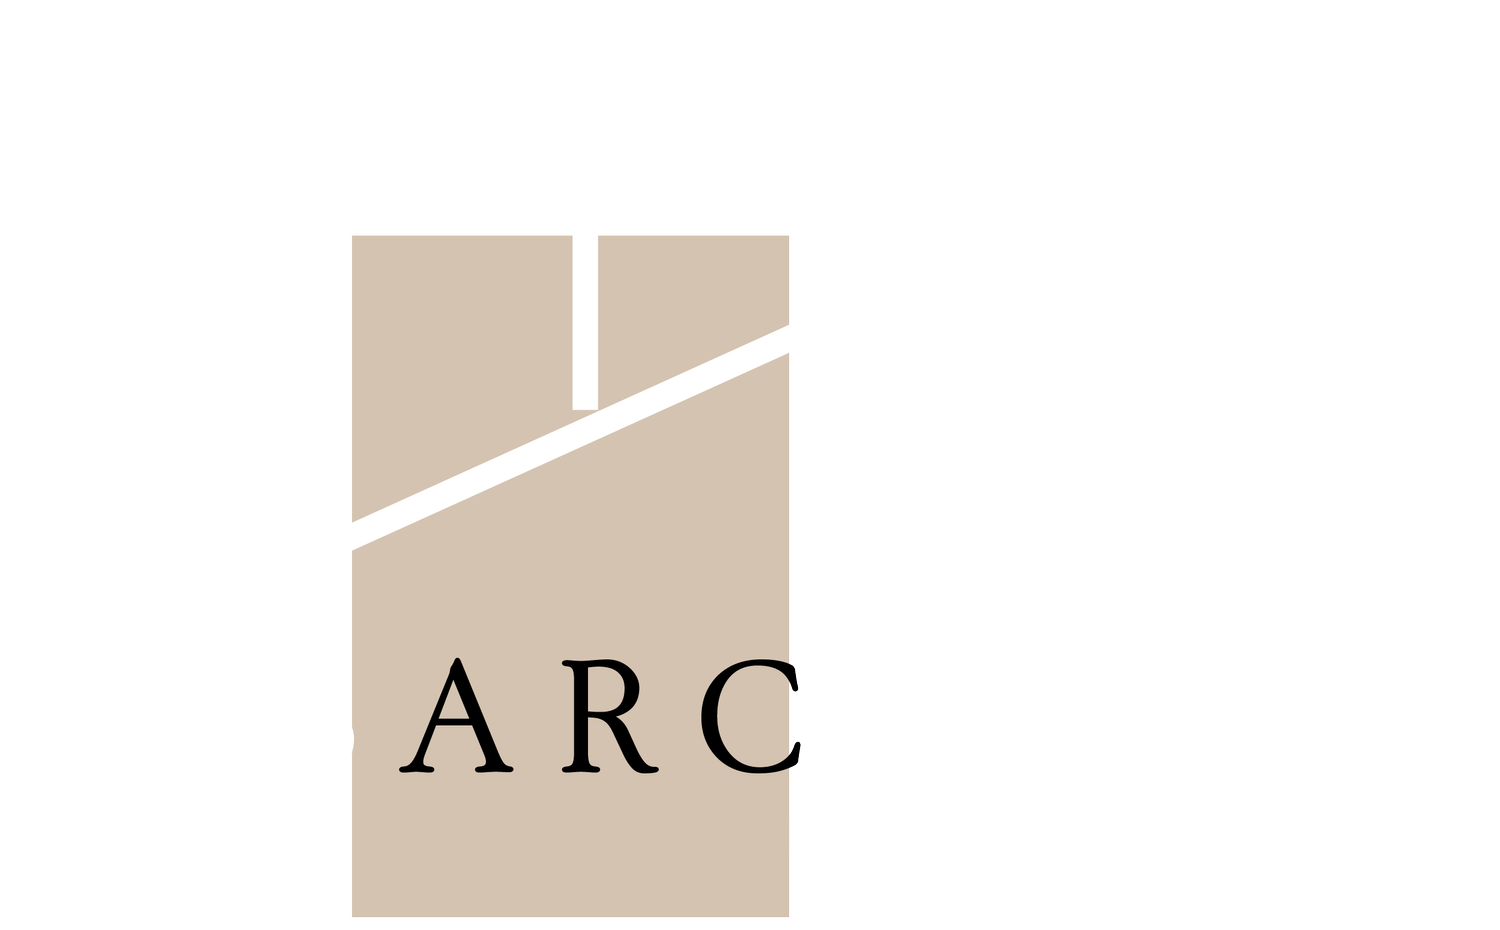 Barcon Construction